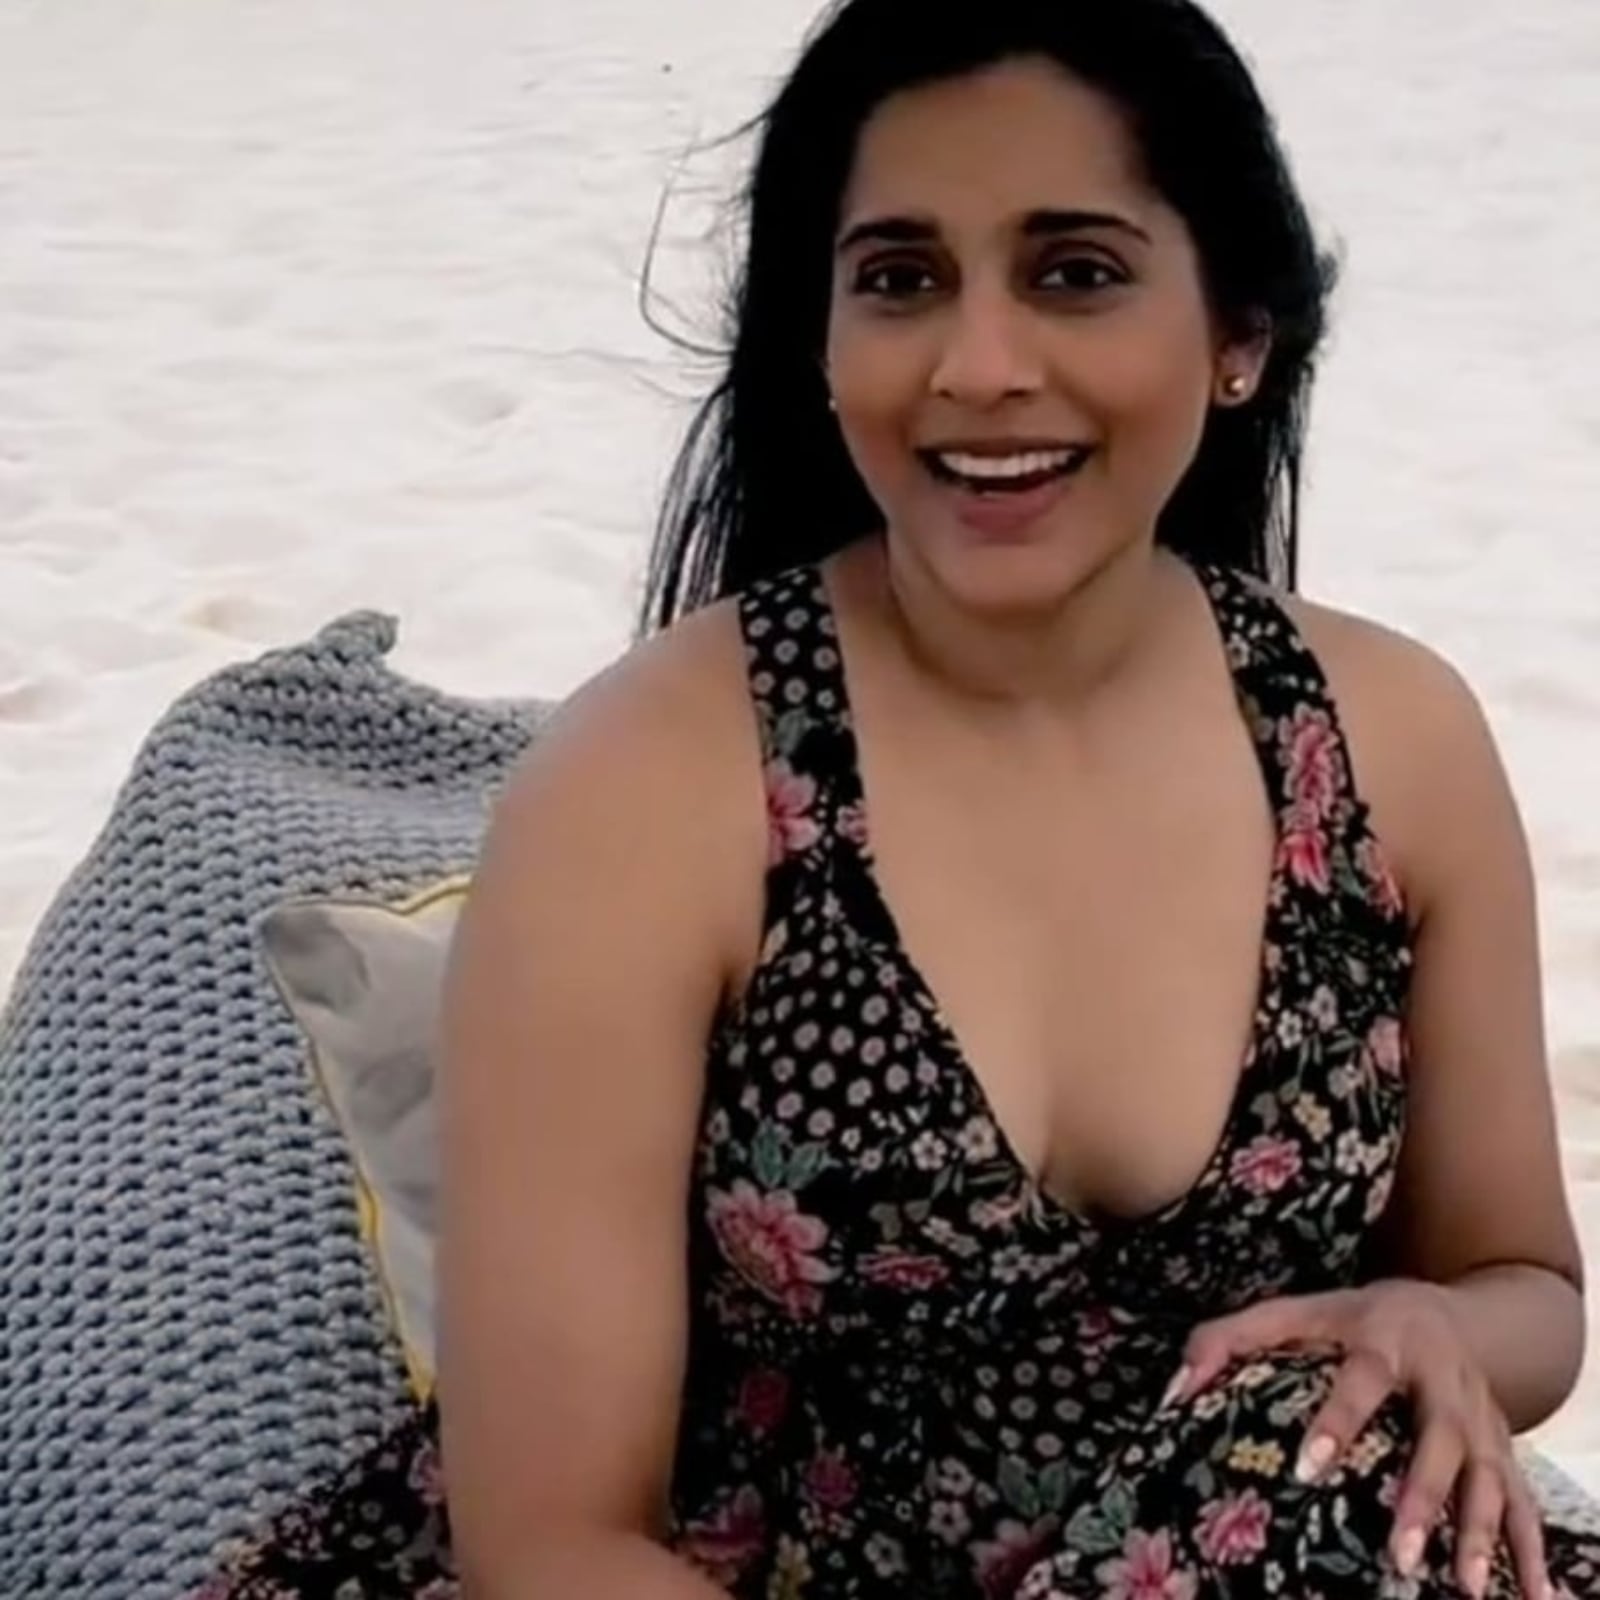 Anchor Reshma Sex - Actress Rashmi Gautam's Dreamy Maldives Vacation Pics Give Us Travel Goals  - News18